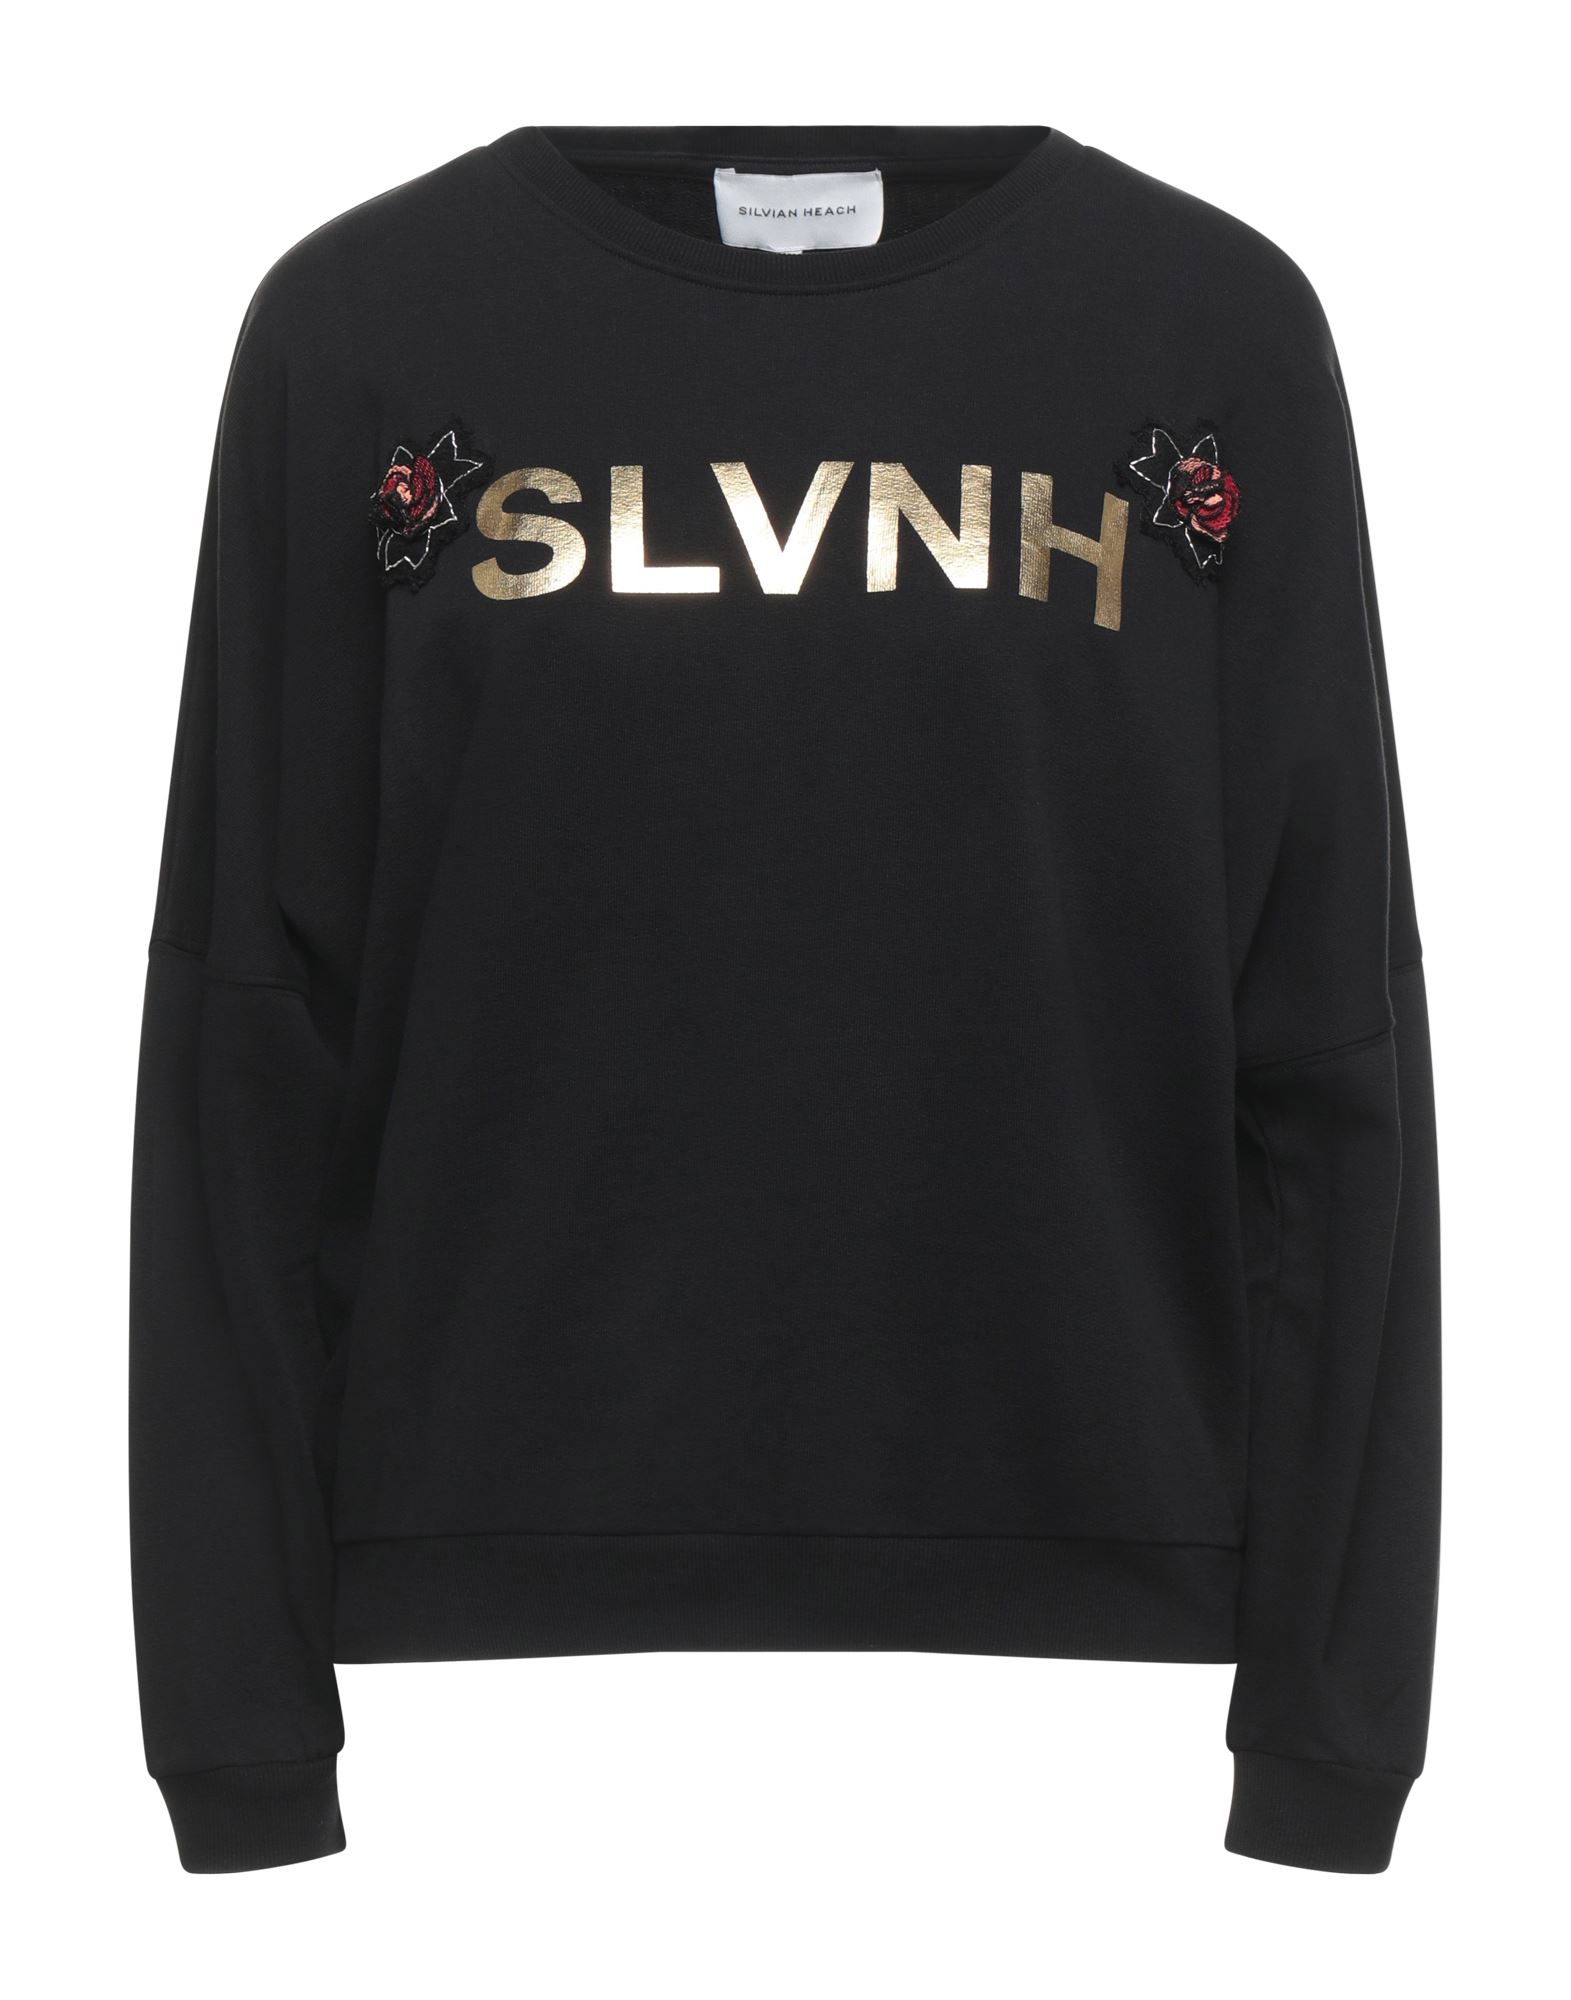 Silvian Heach Sweatshirts In Black